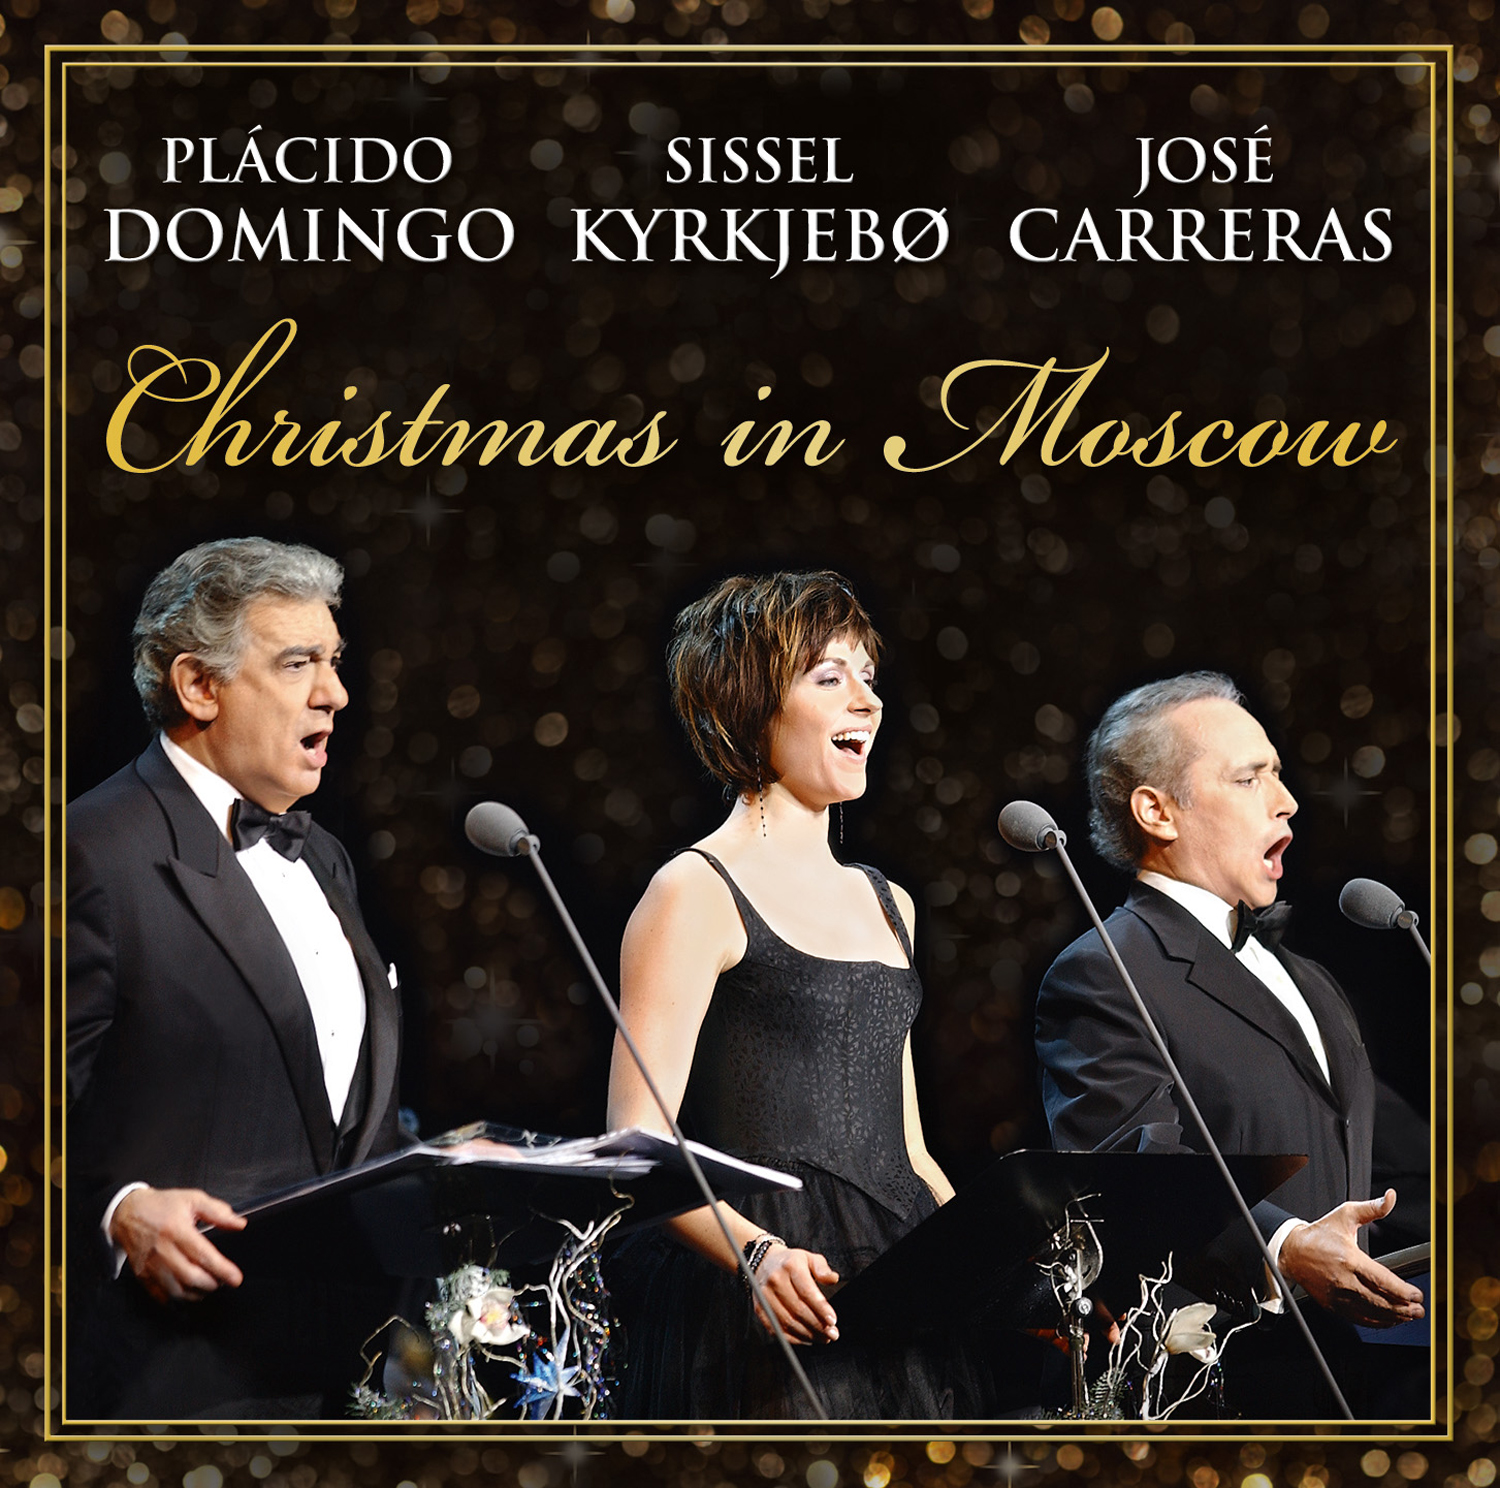 Domingo, Moscow (CD) - Kyrkjebo In Plácido - Sissel Christmas José Carreras,